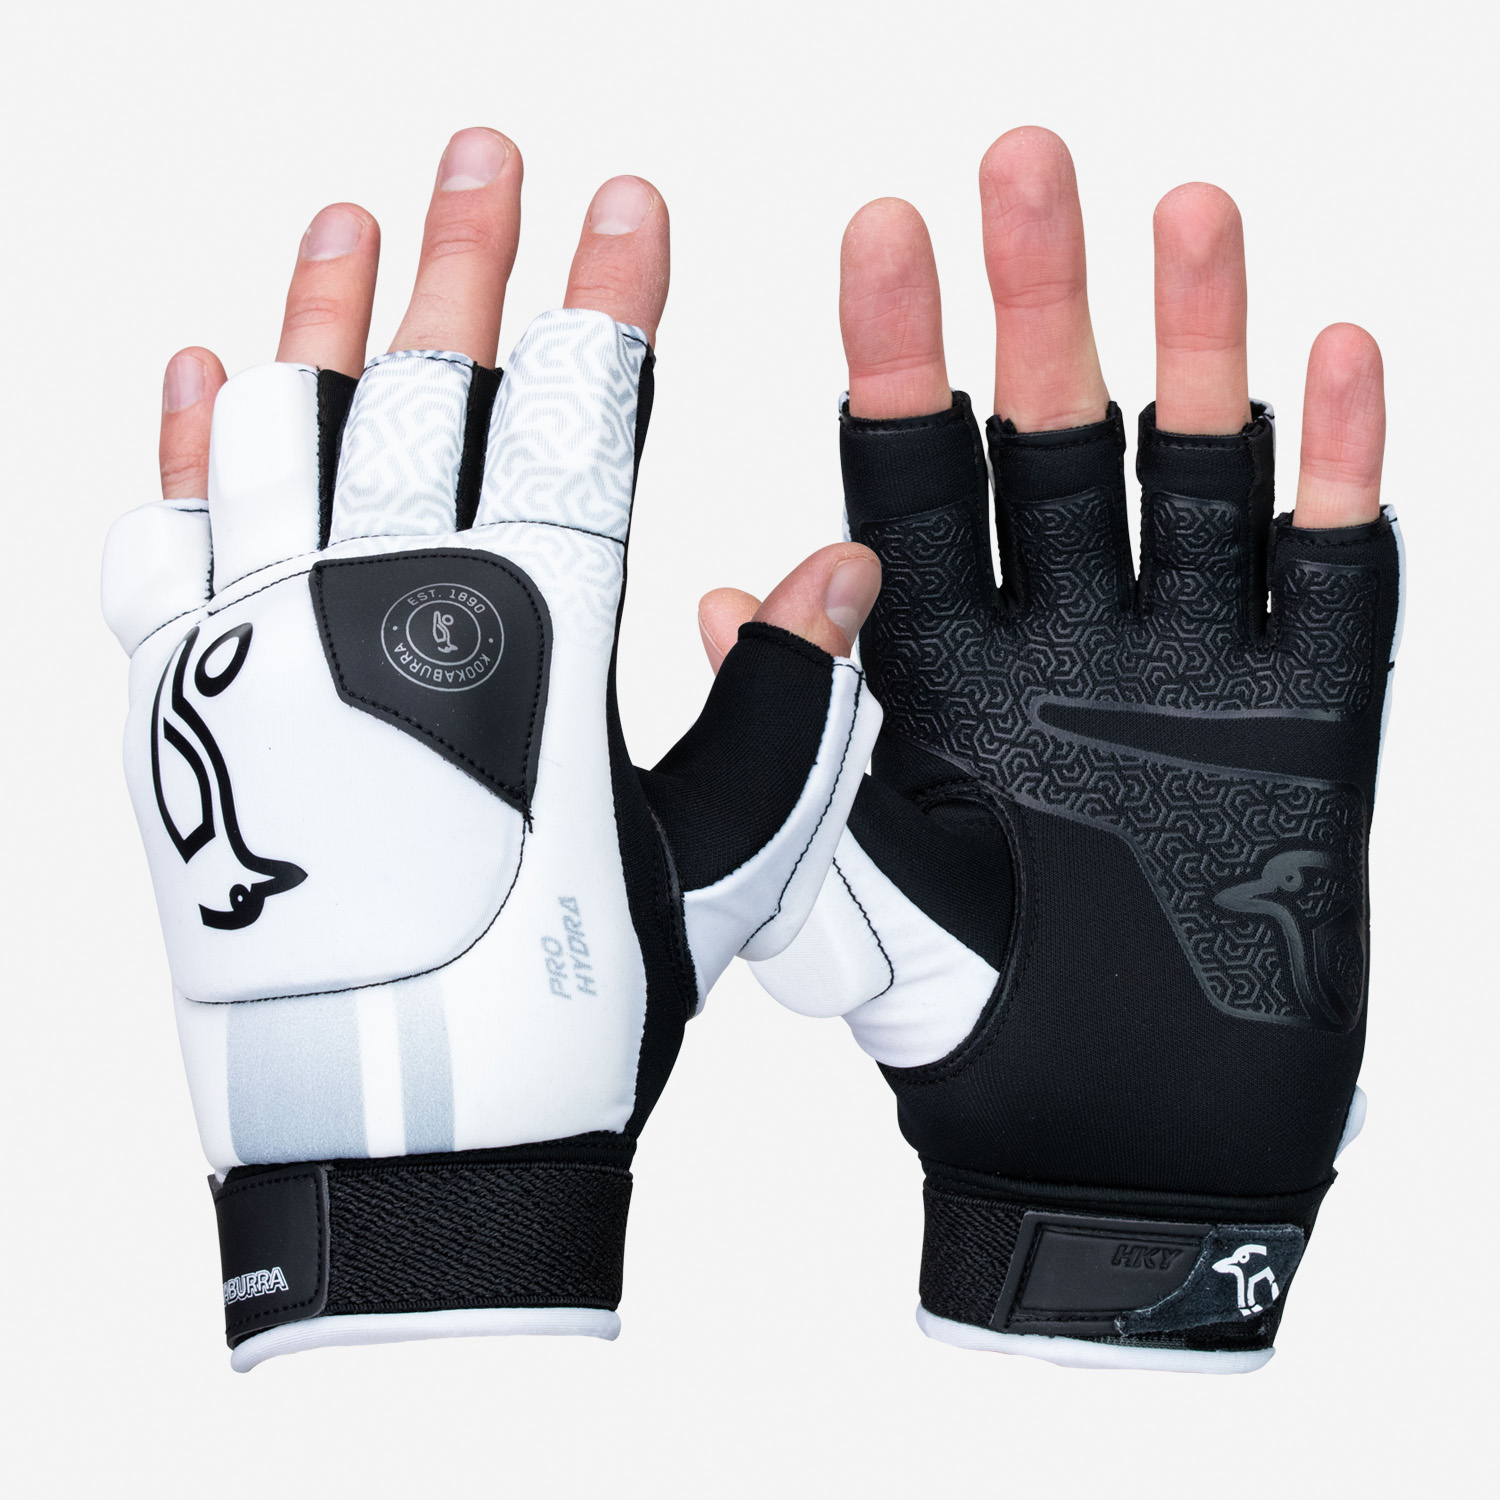 Kookaburra Pro Hydra Hockey Glove